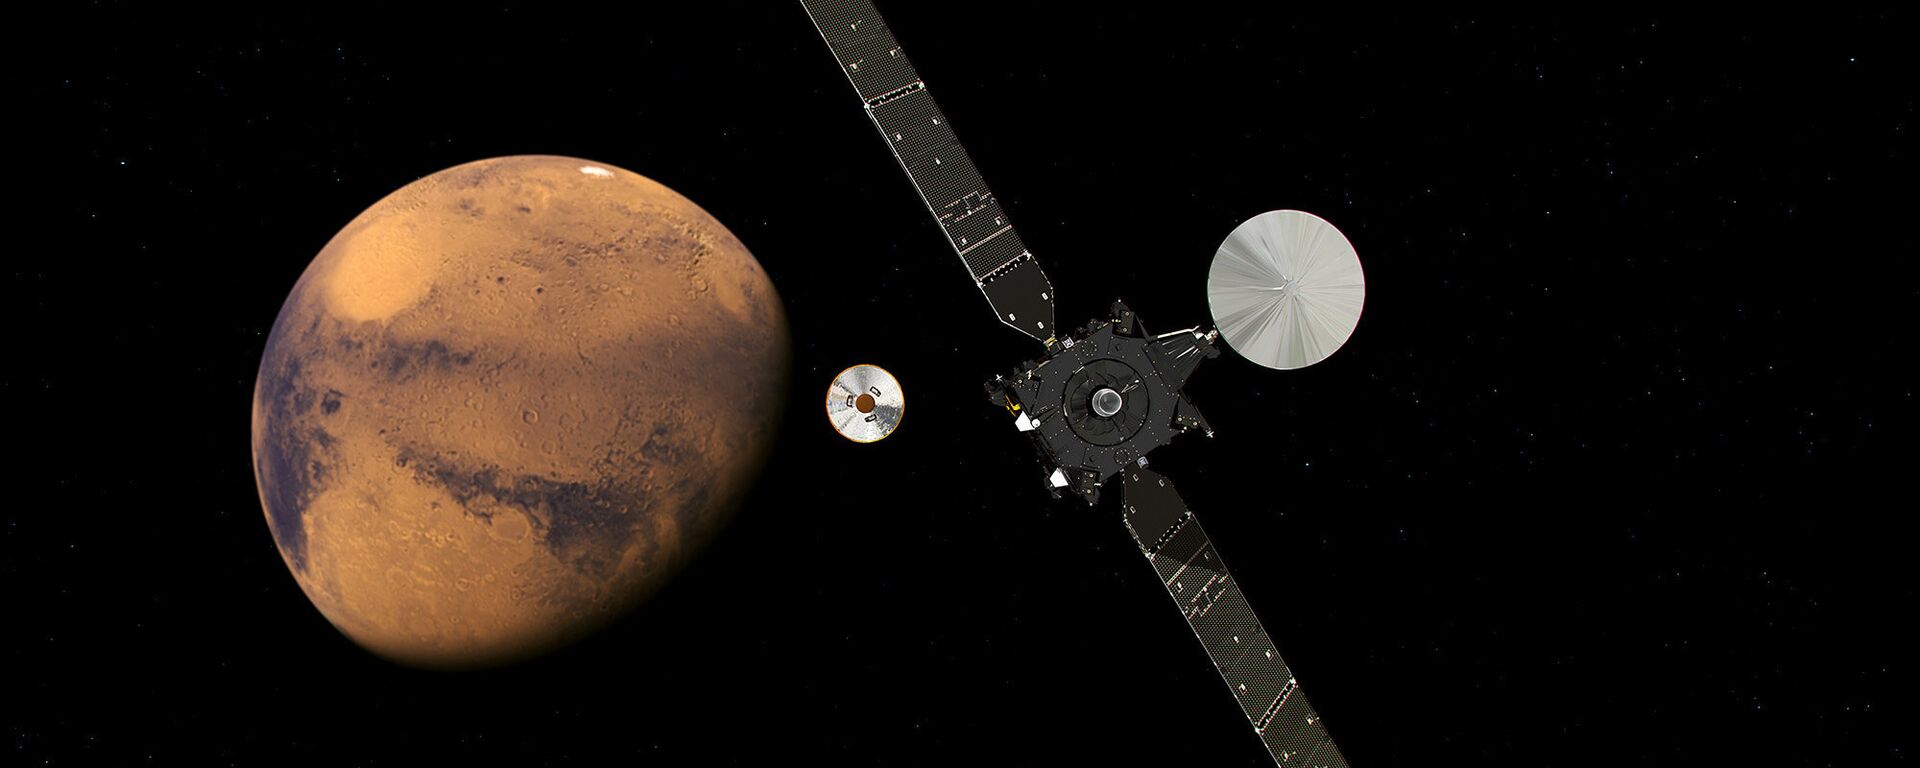 Orbiter EgzoMars prilazi planeti Mars - Sputnik Srbija, 1920, 12.03.2020